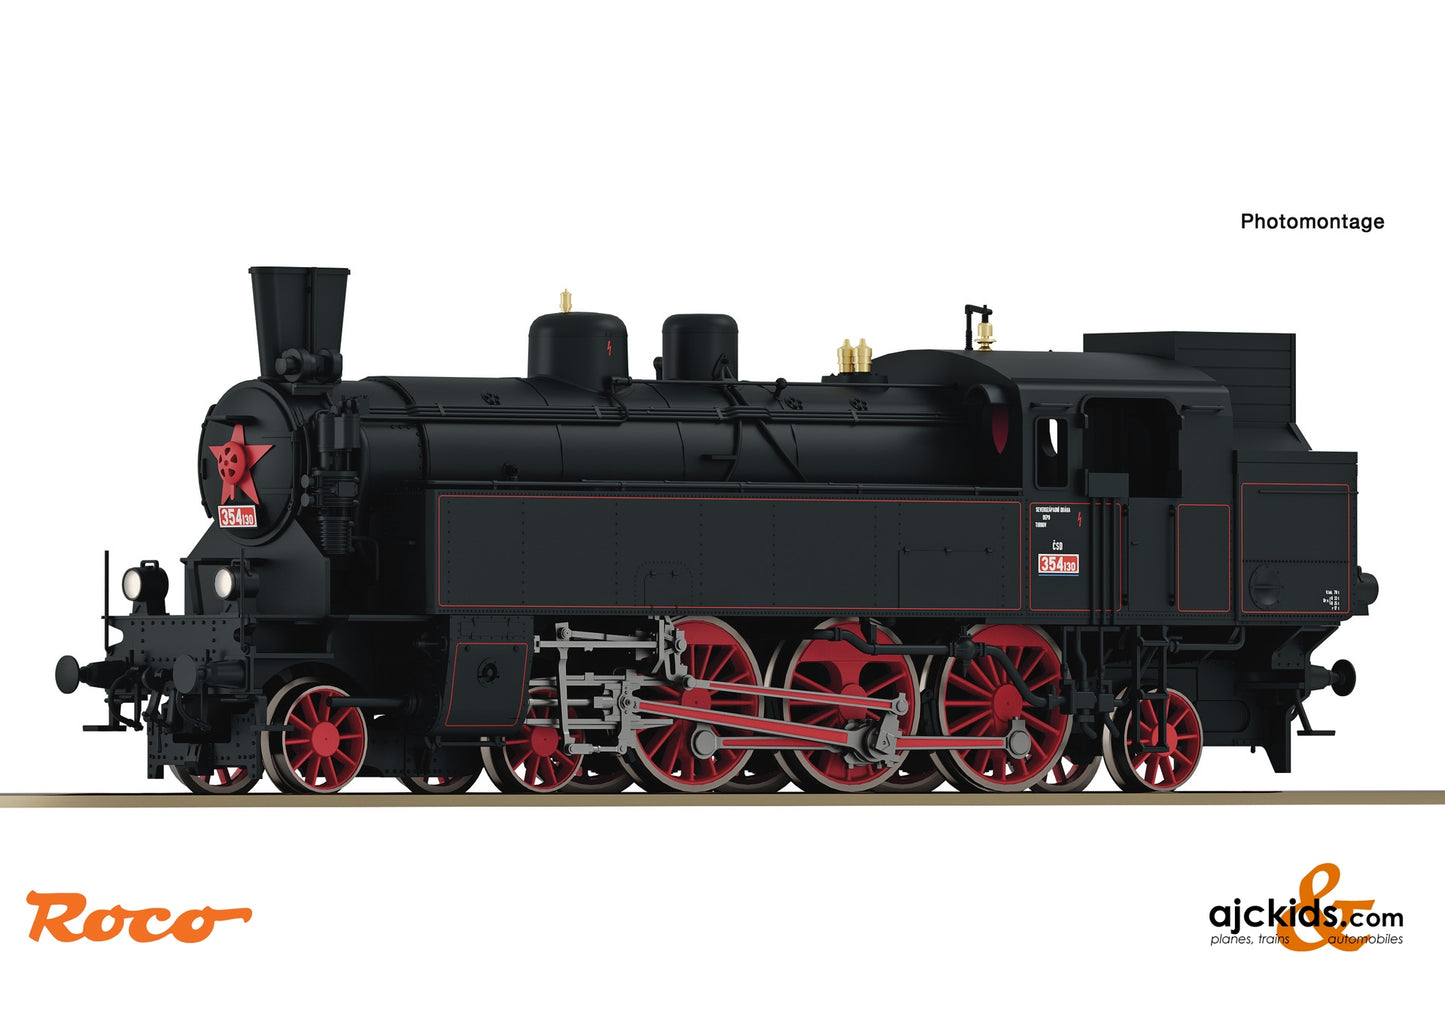 Roco 70080 - Steam locomotive class 354.1, CSD at Ajckids.com